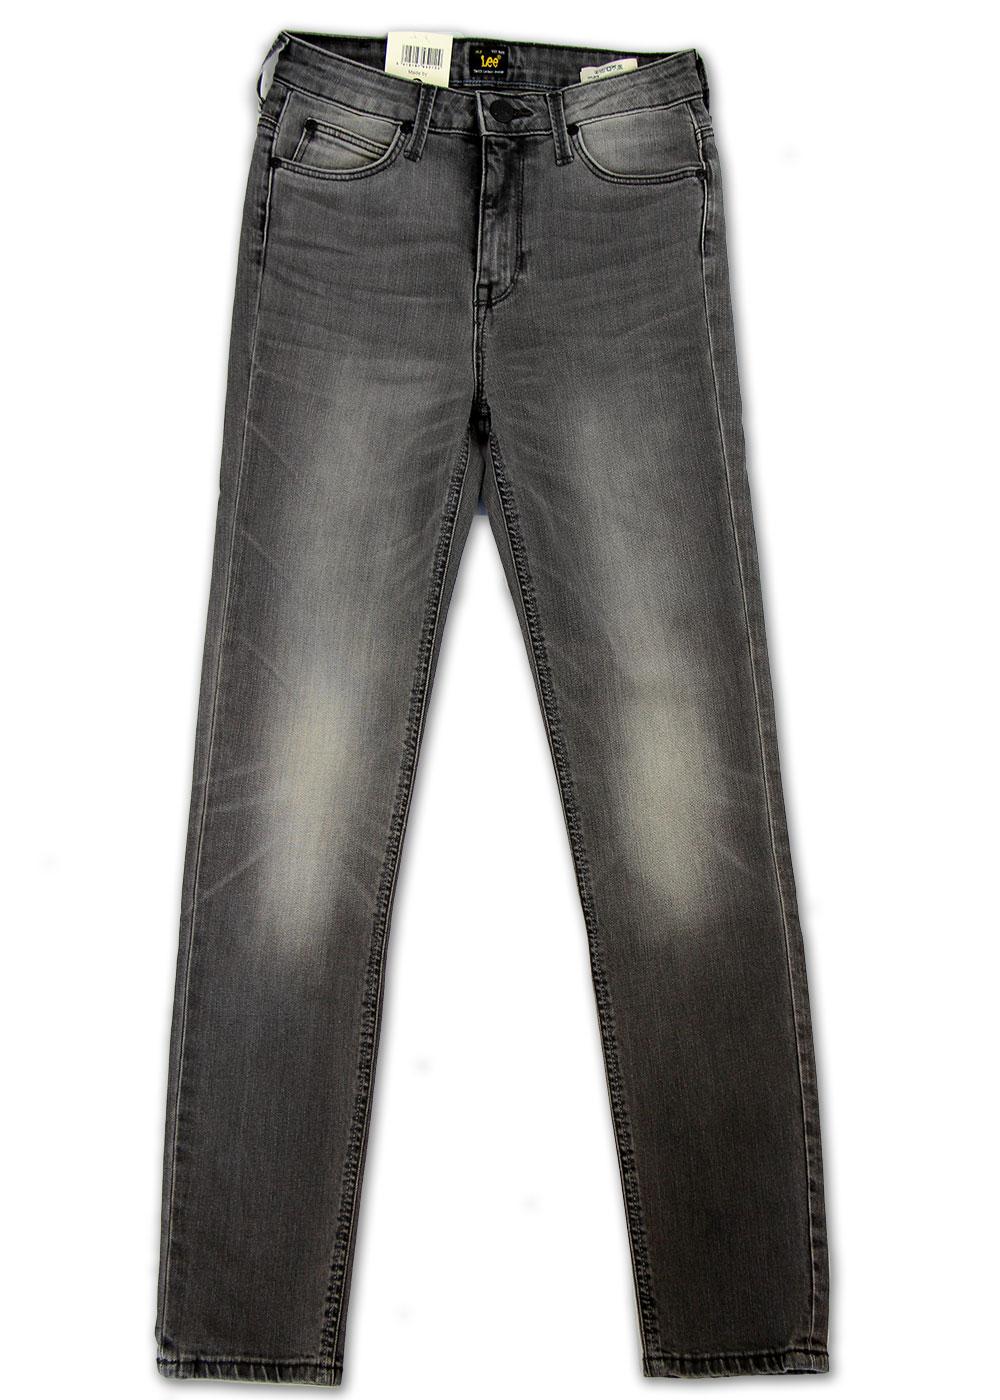 LEE Skyler Retro Indie Stretch Skinny Jeans Jeggings Chrome Wash